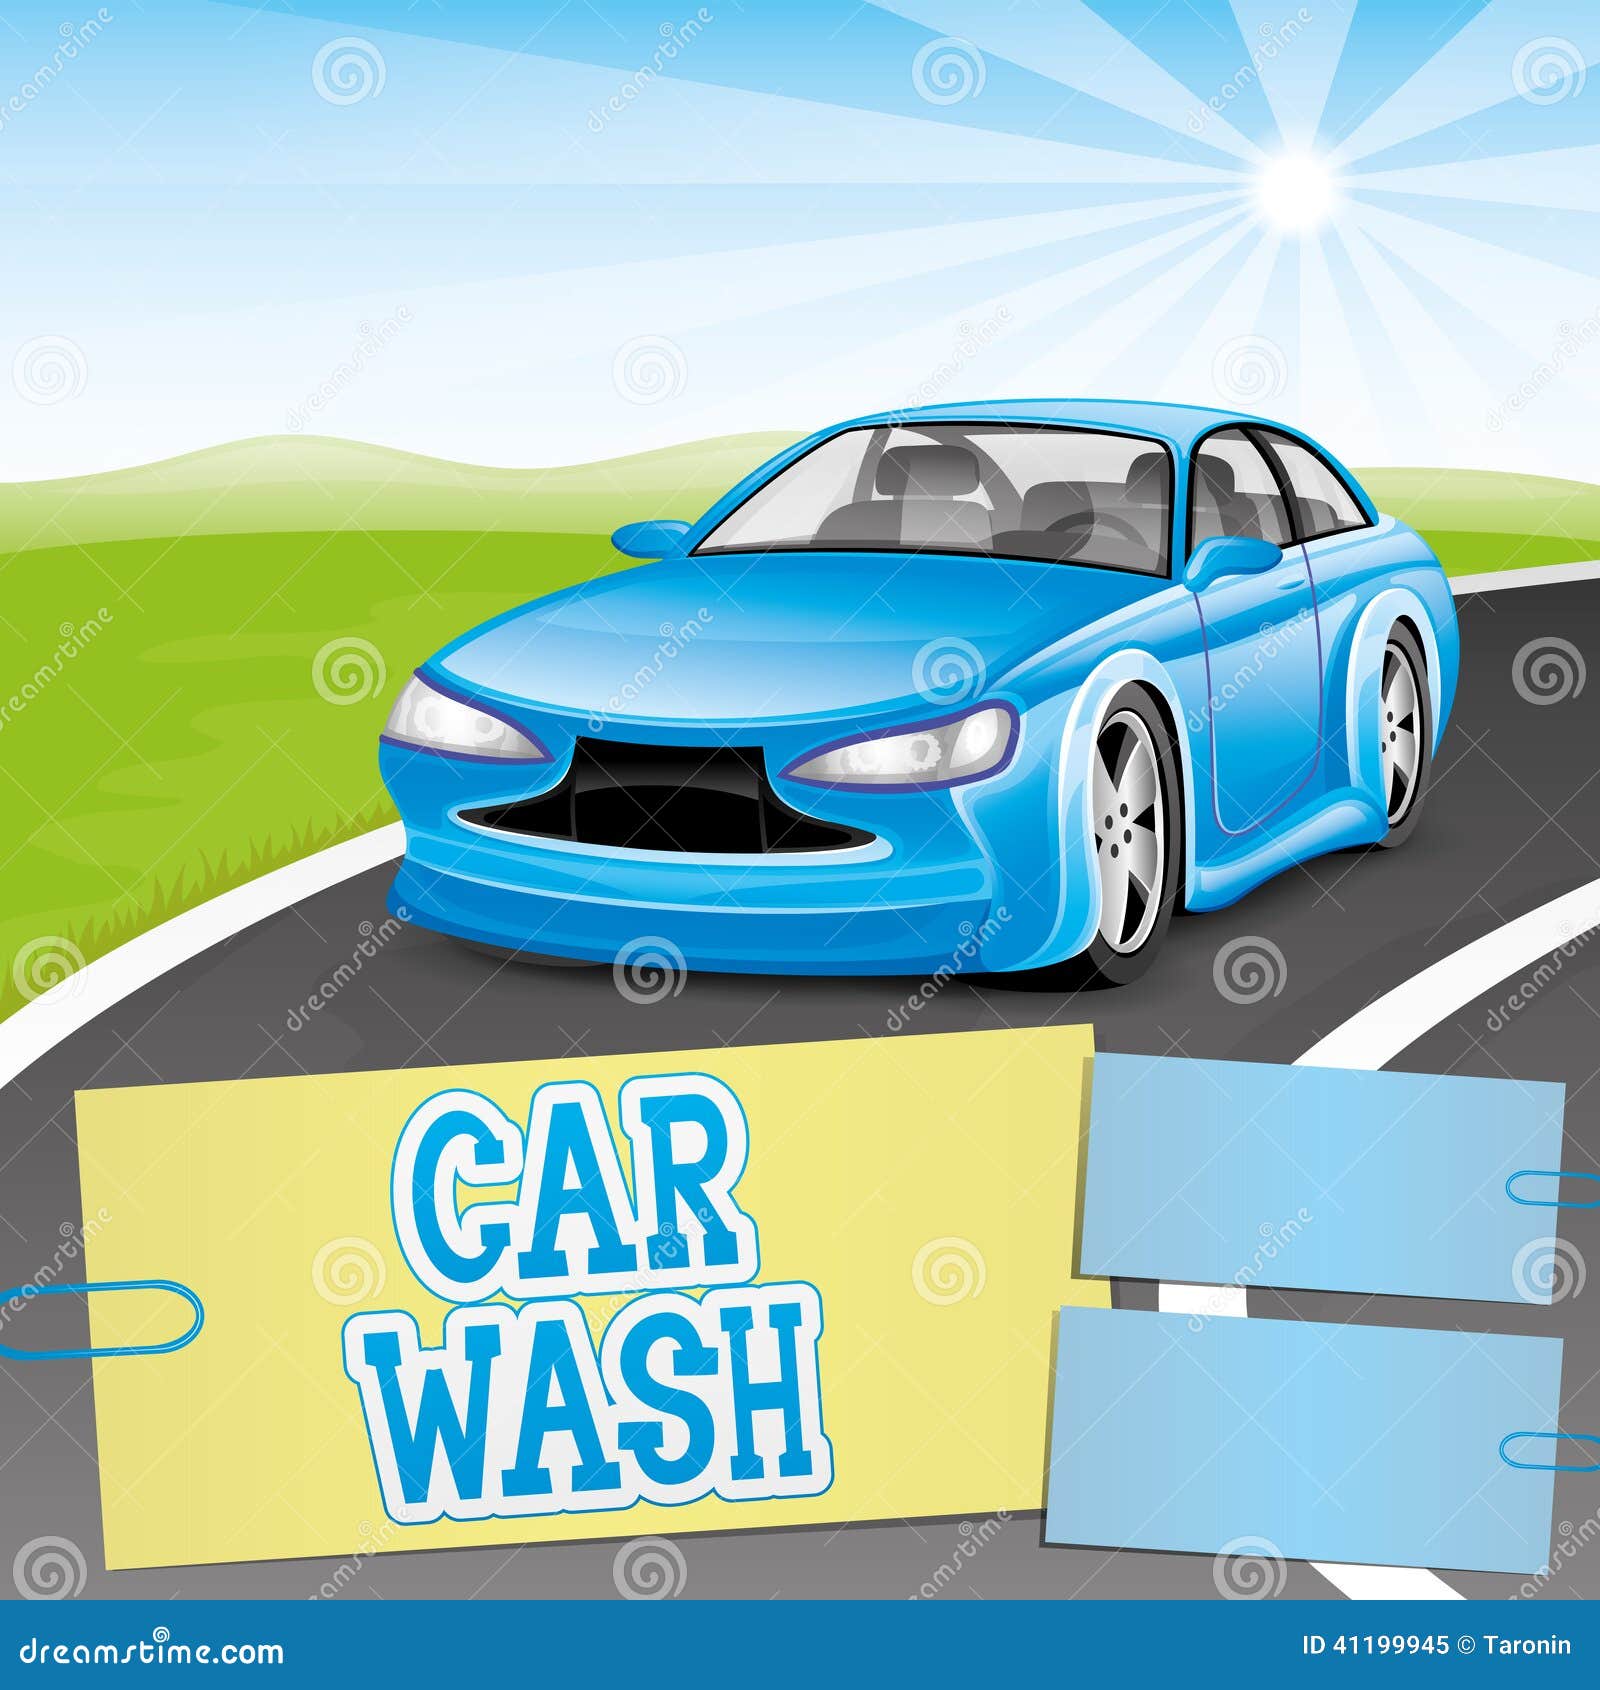 Car Wash. Stock Vector - Image: 41199945